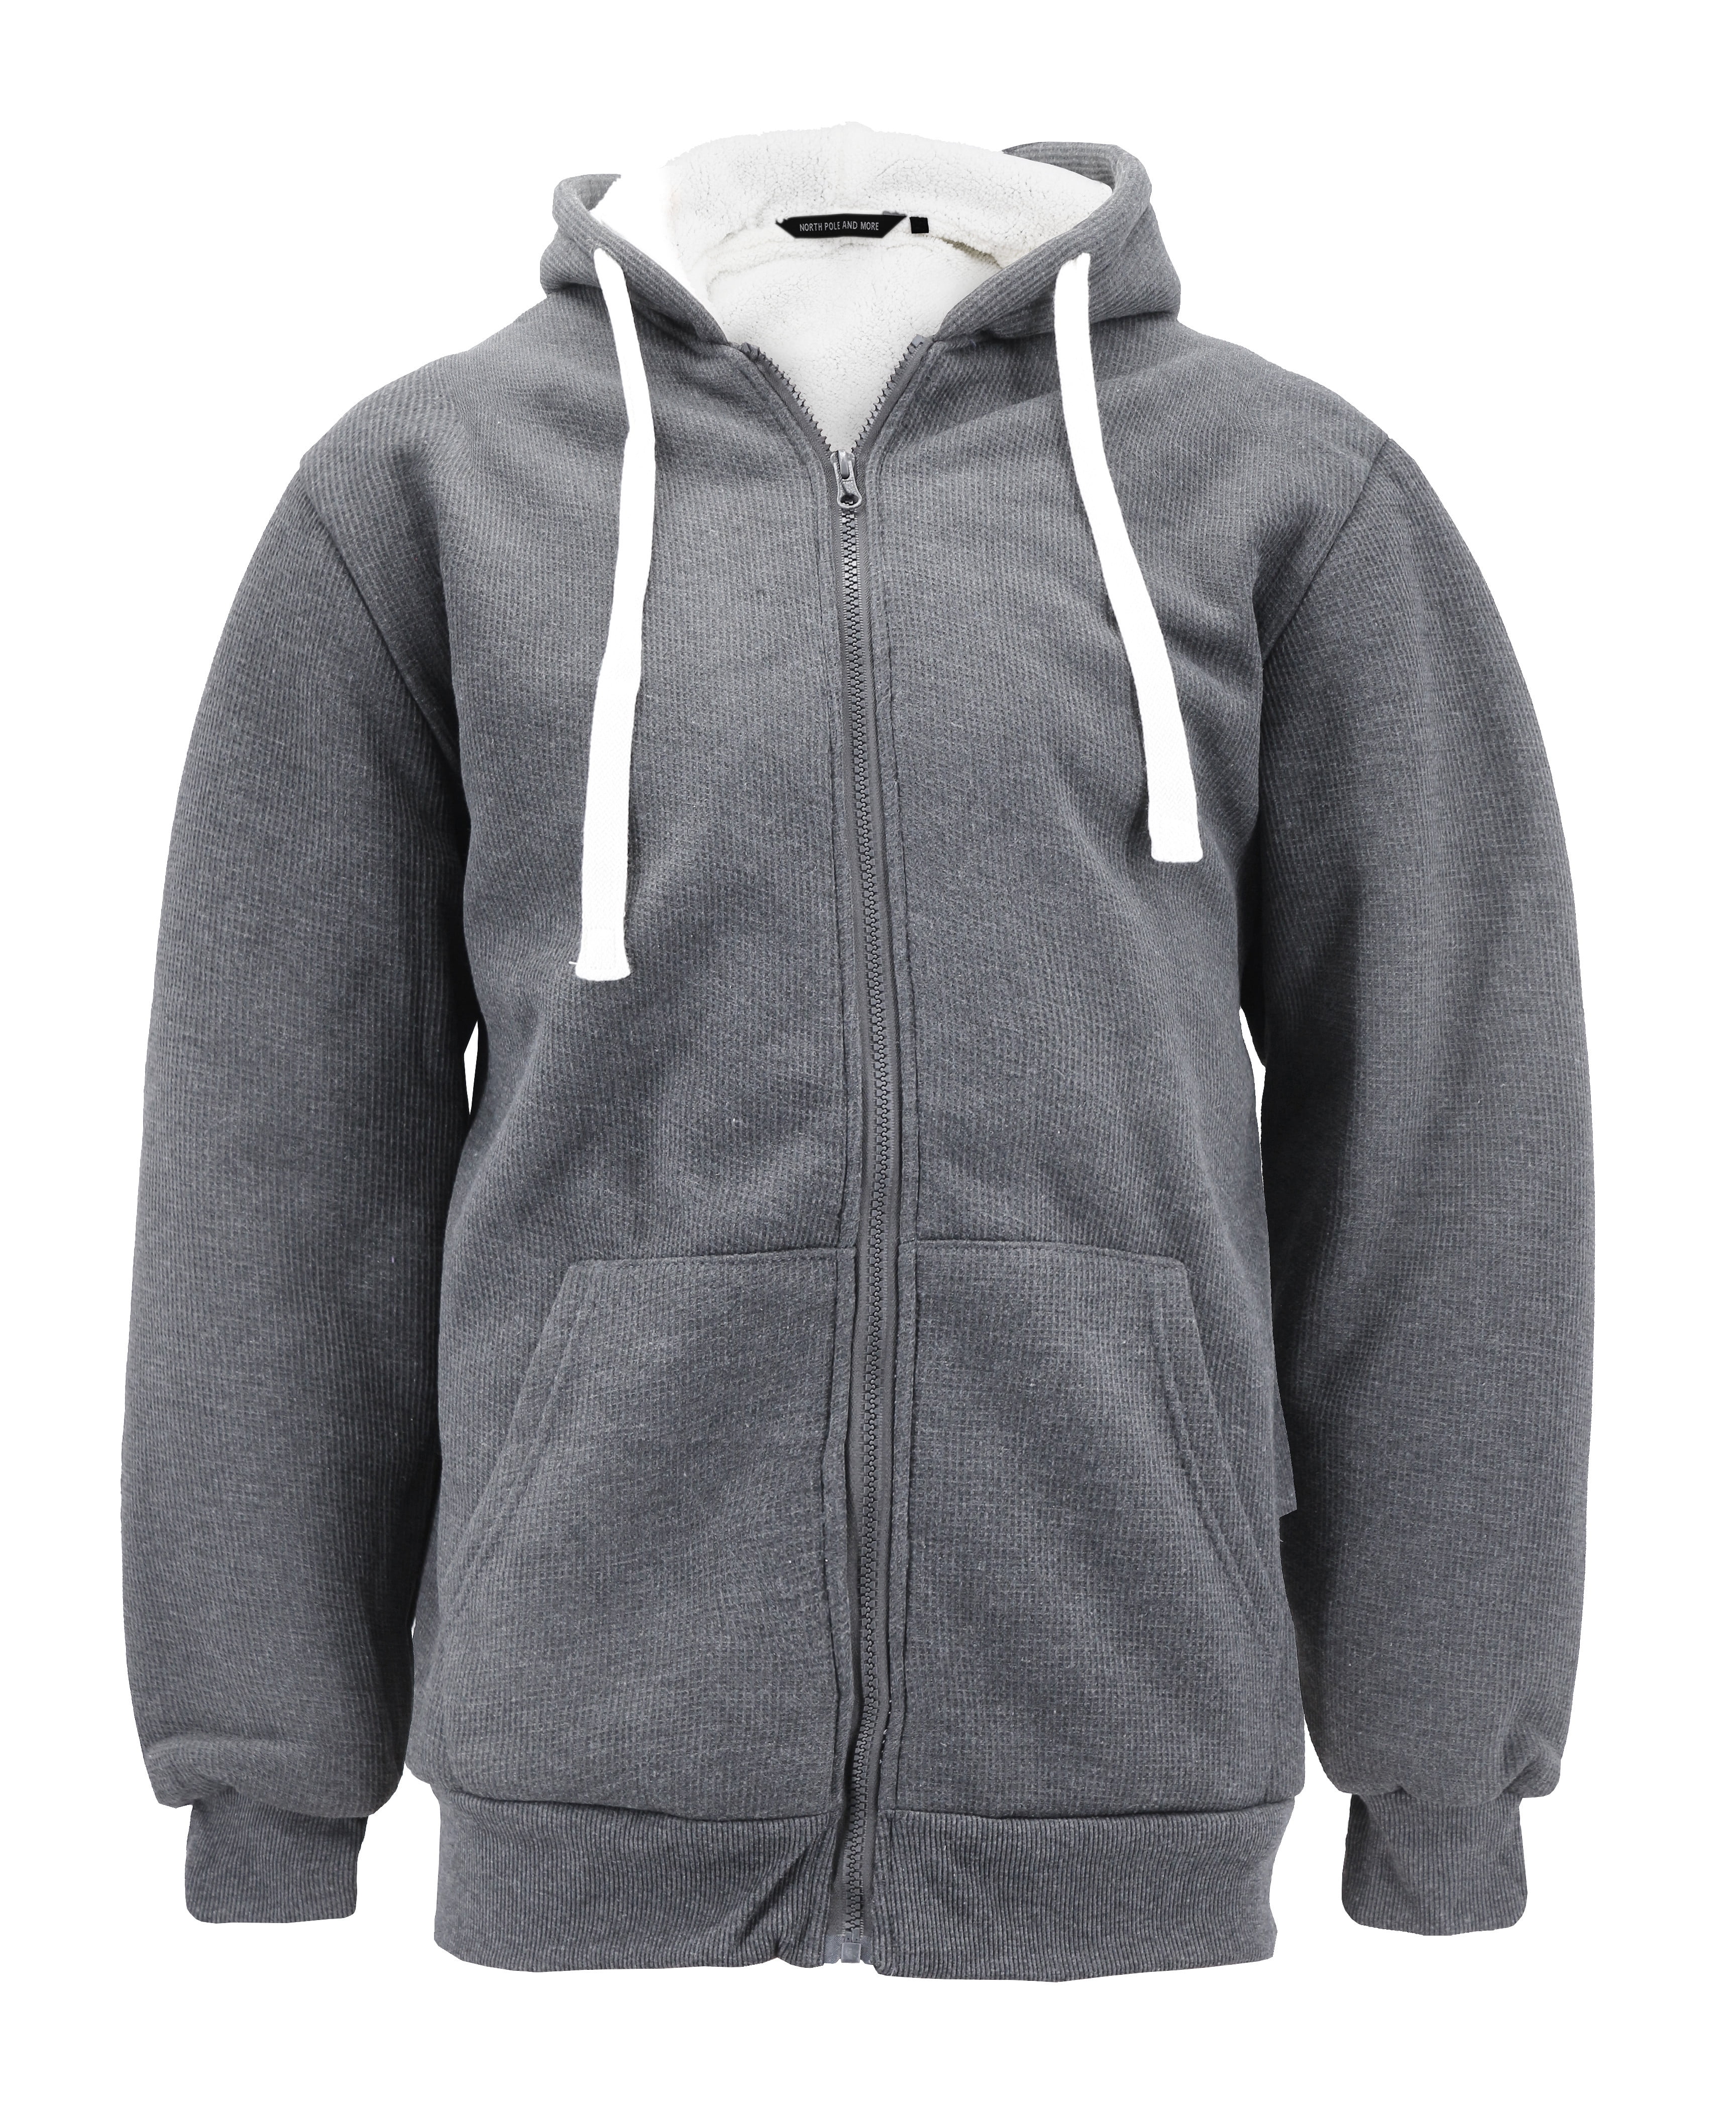 Men's Heavyweight Thermal Zip Up Hoodie Warm Sherpa Lined Sweater Jacket  (Black, XL) 